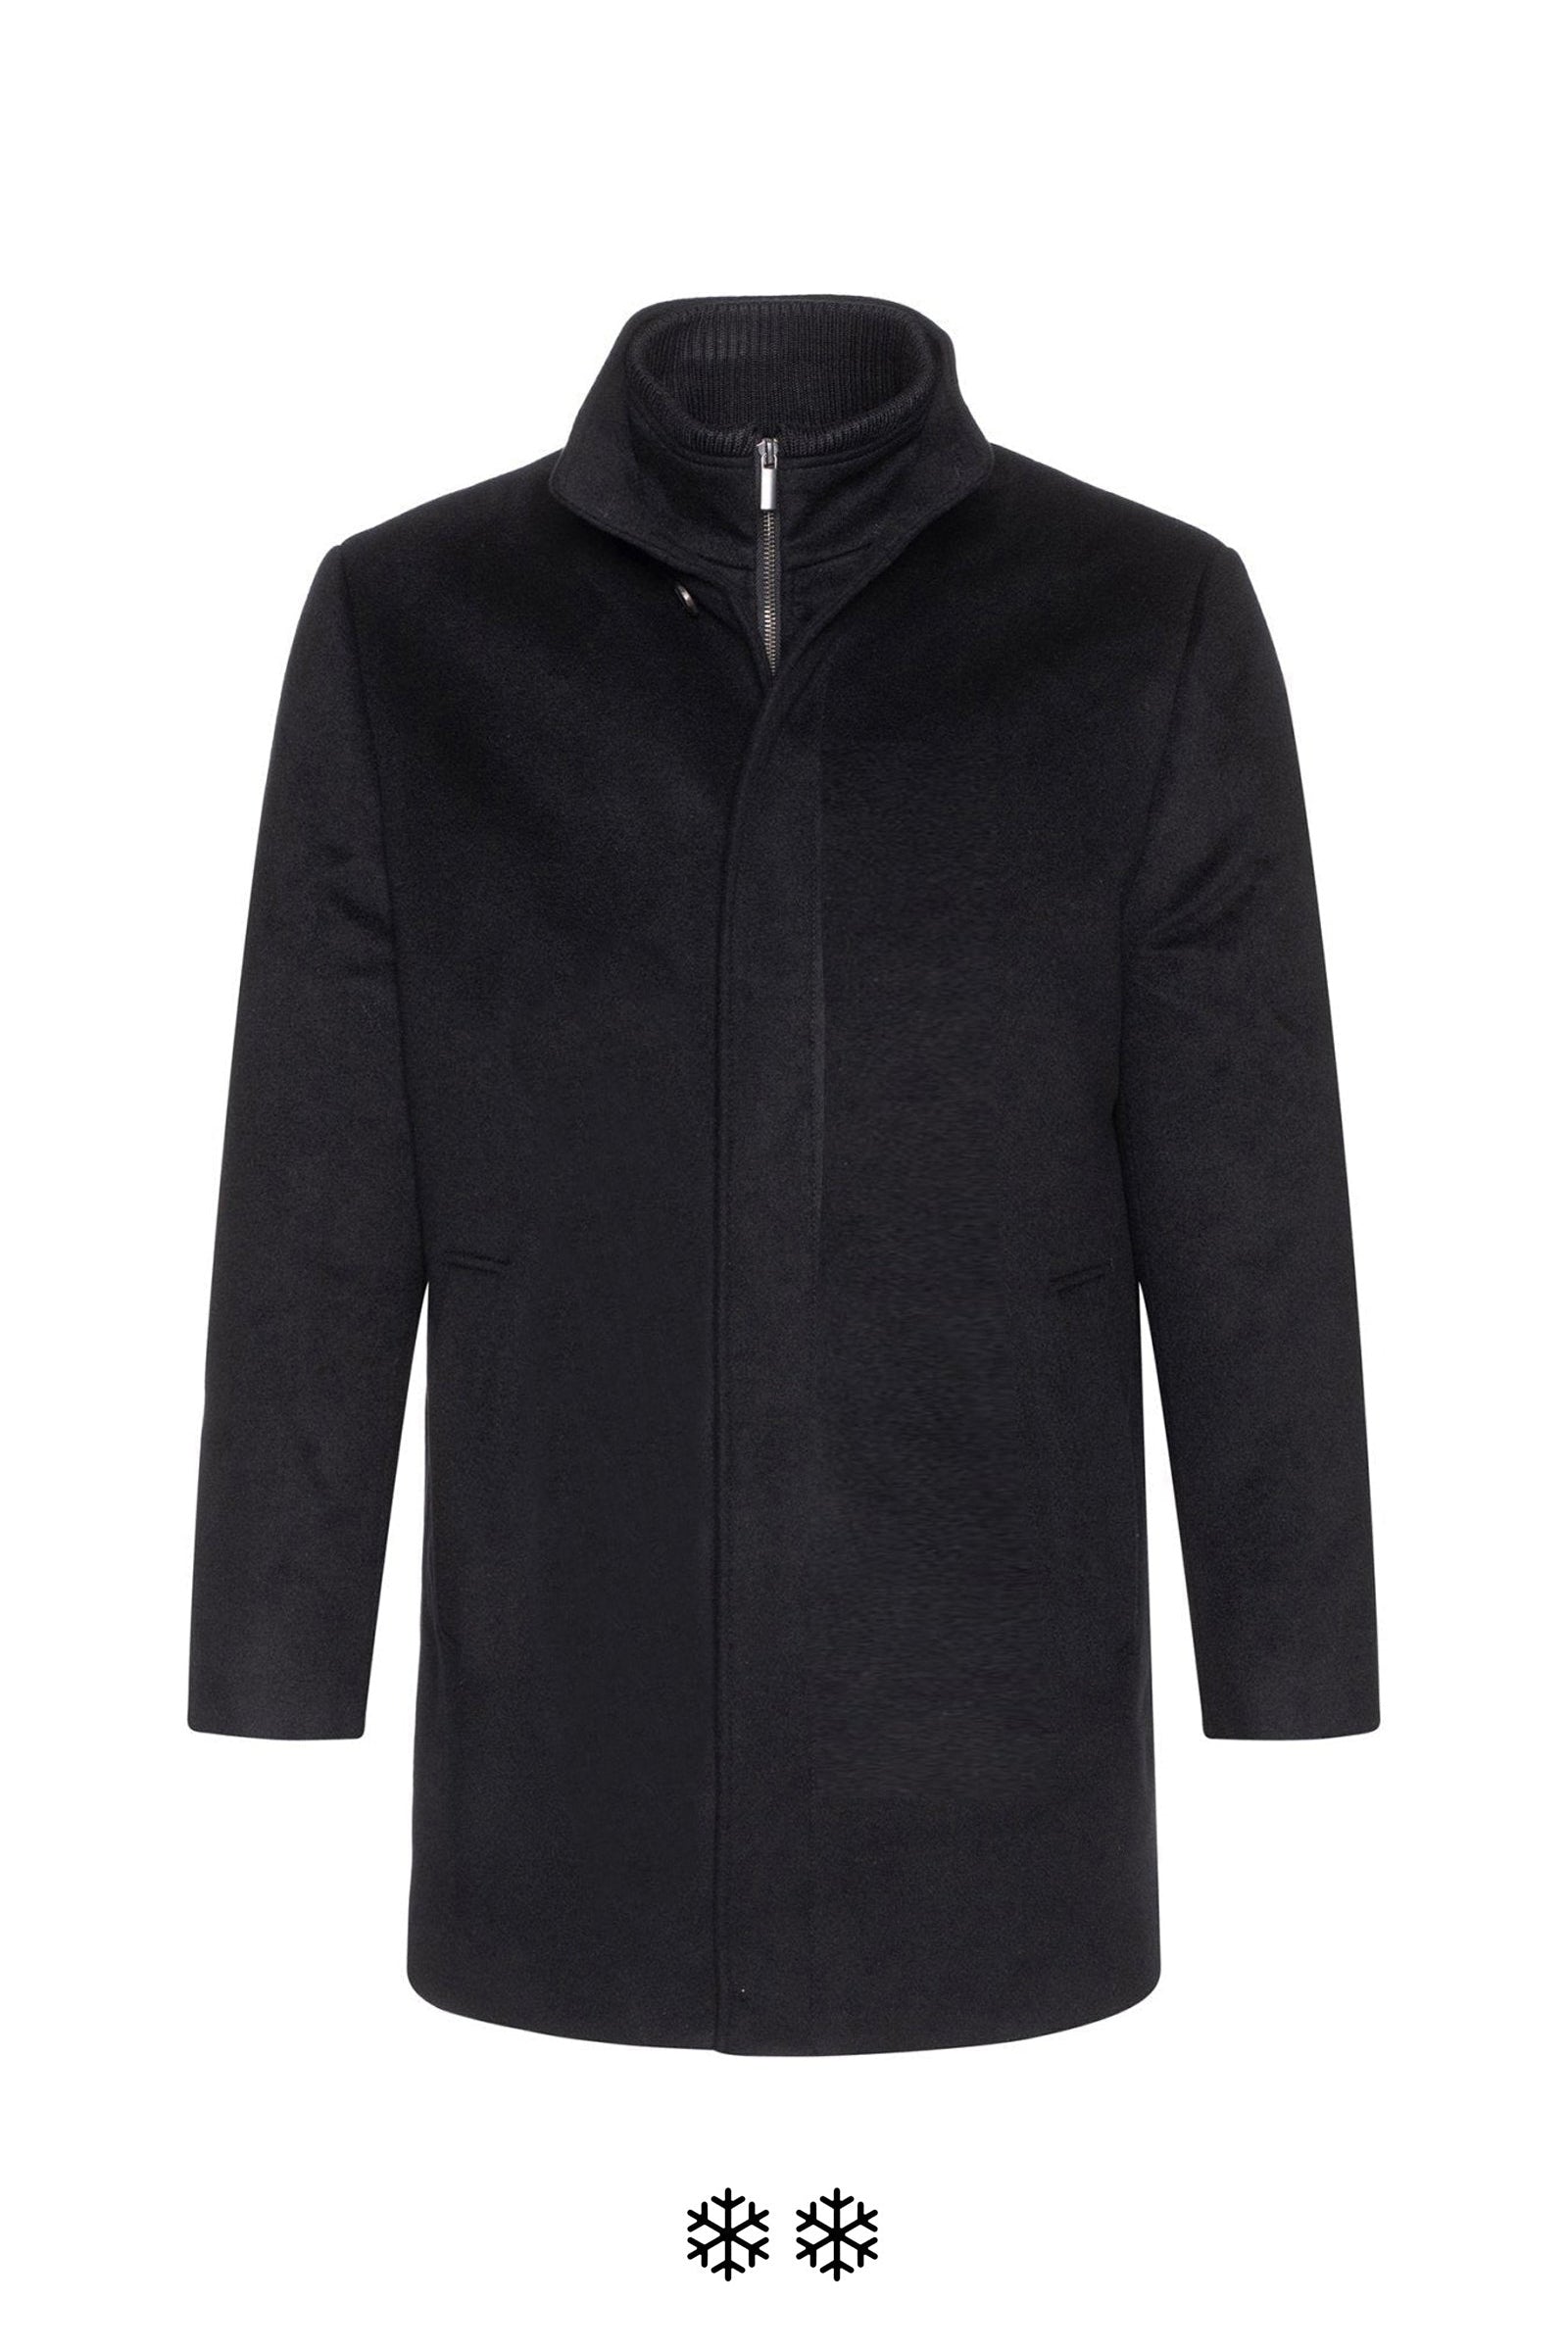 MONT-ROYAL BLACK WOOL & CASHMERE CAR COAT - Cardinal of Canada-CA - mont-royal black wool and cashmere car coat